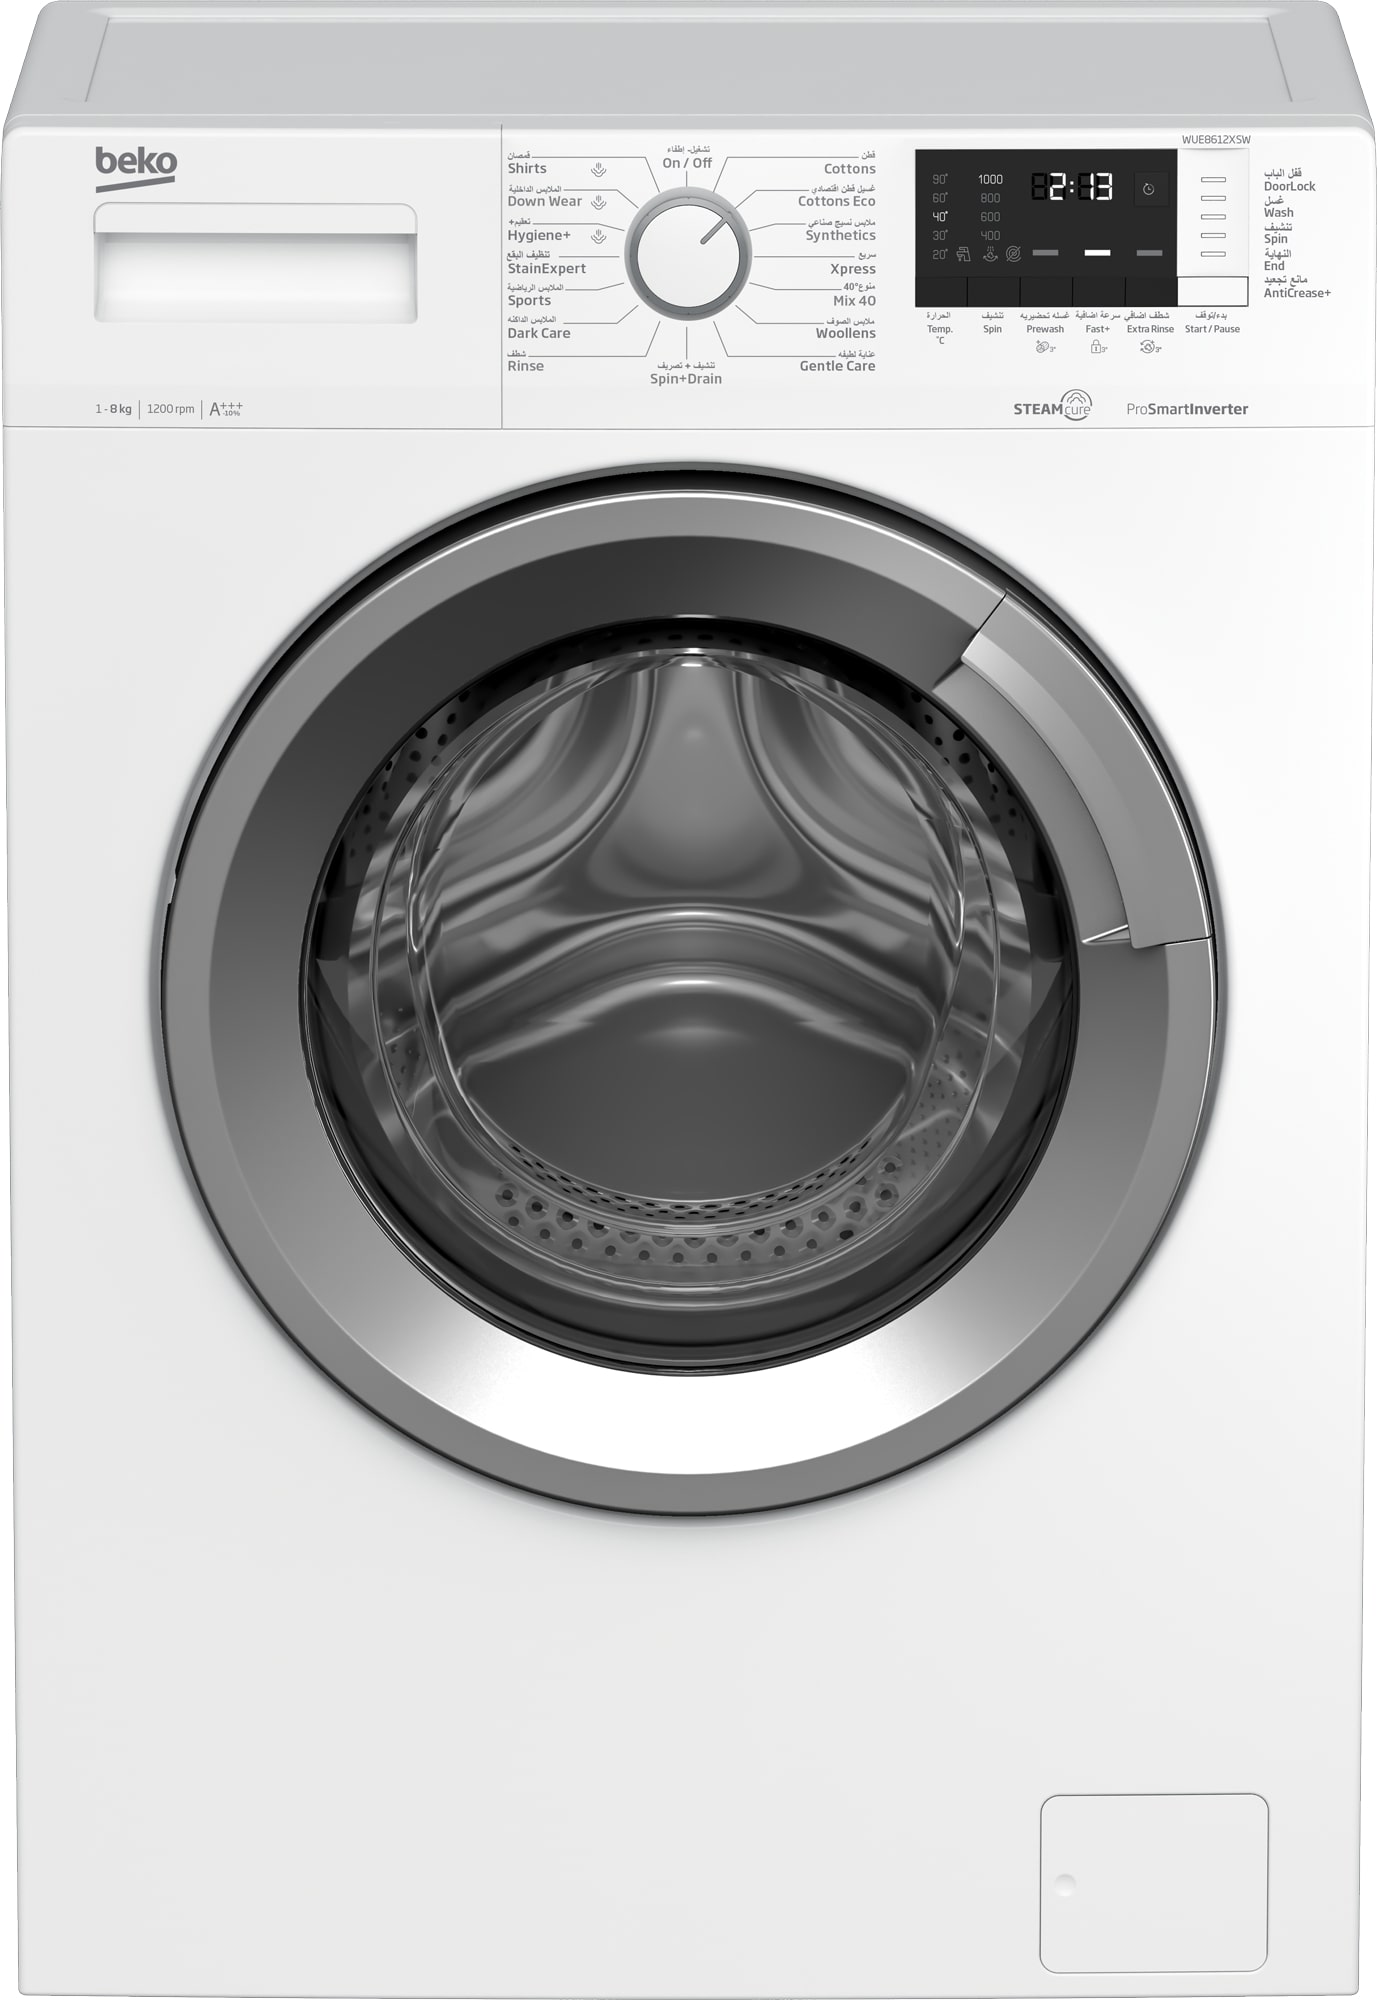 Beko Washing Machine 8 kg 1200 rpm - White